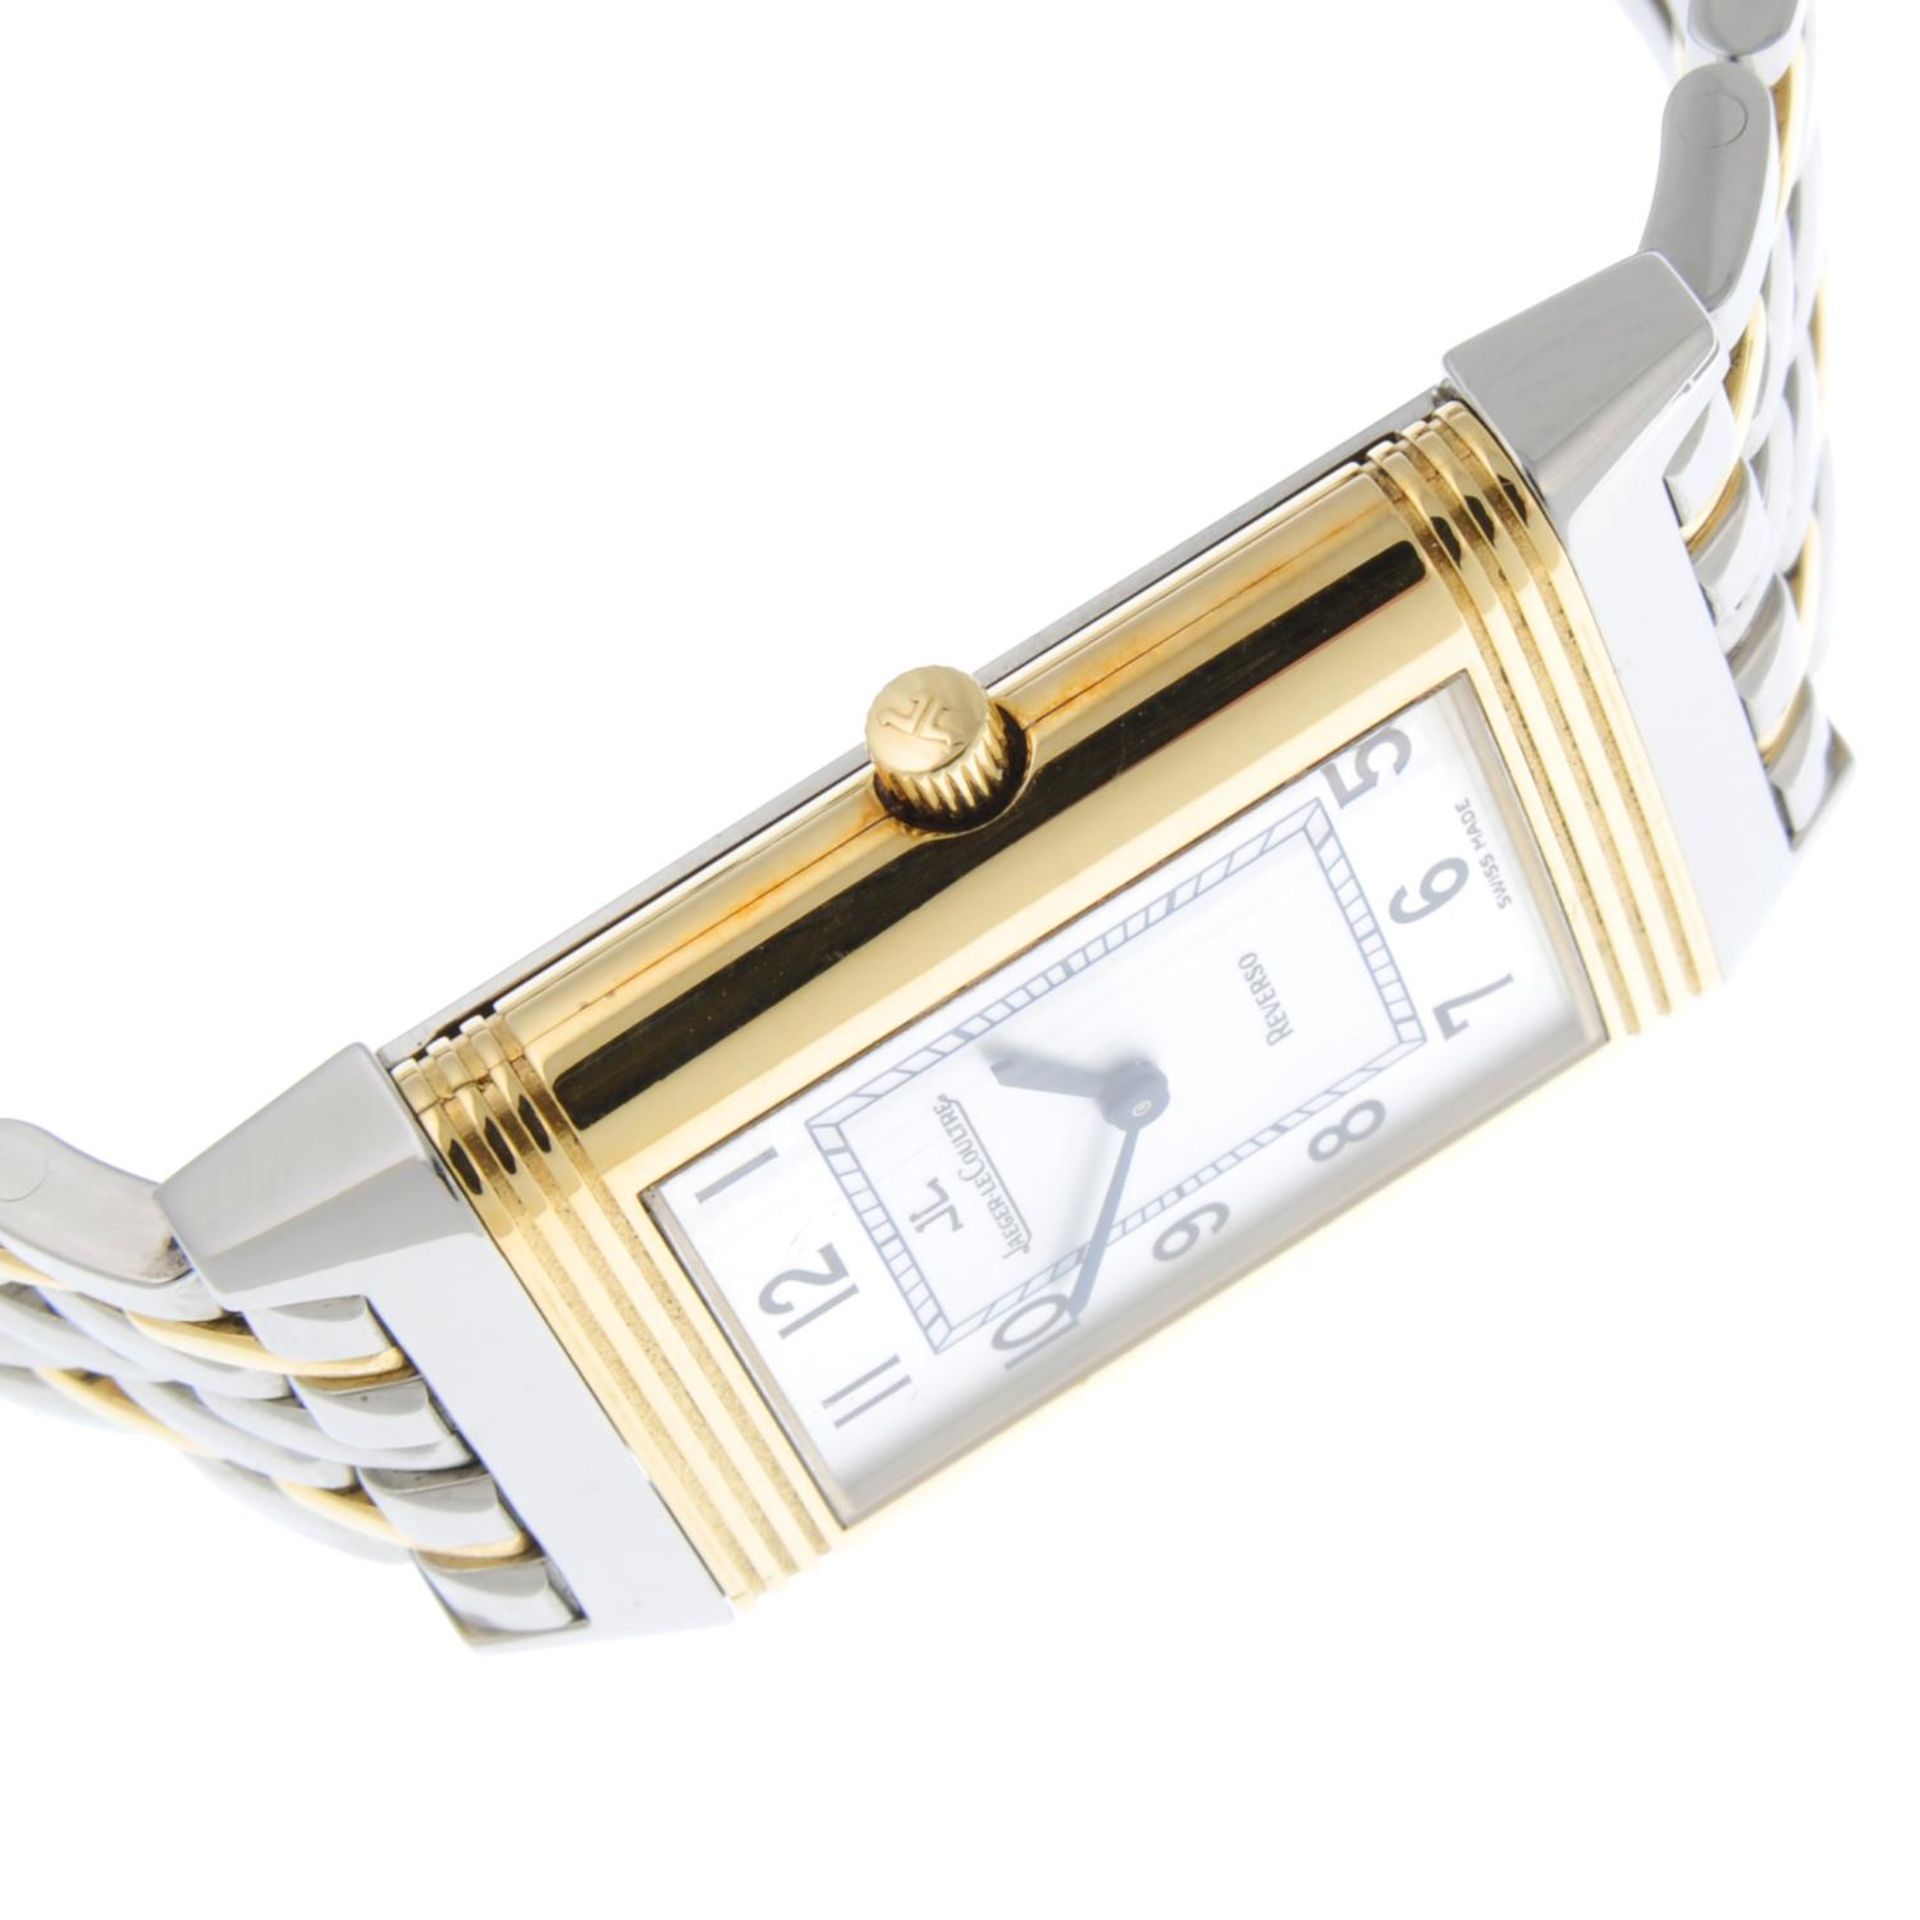 JAEGER-LECOULTRE - a lady's Reverso bracelet watch. - Image 5 of 7